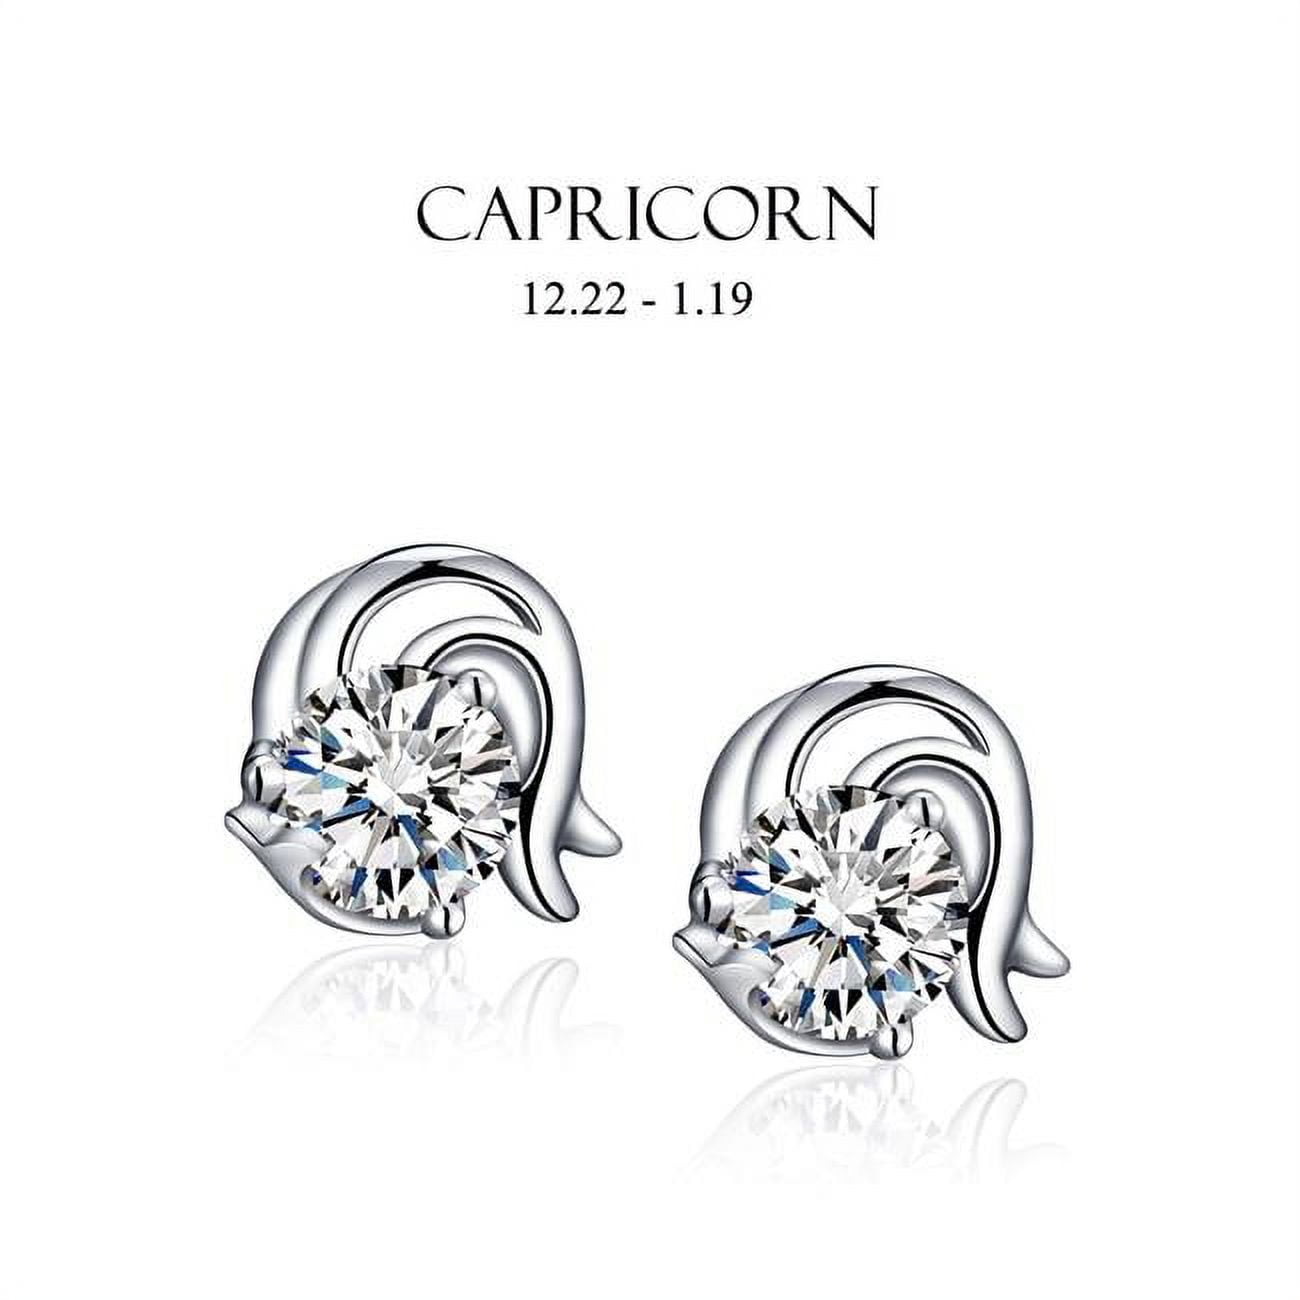 E-i2czcpr-rdm Rhodium Cubic Zirconia Capricorn Stud Earrings